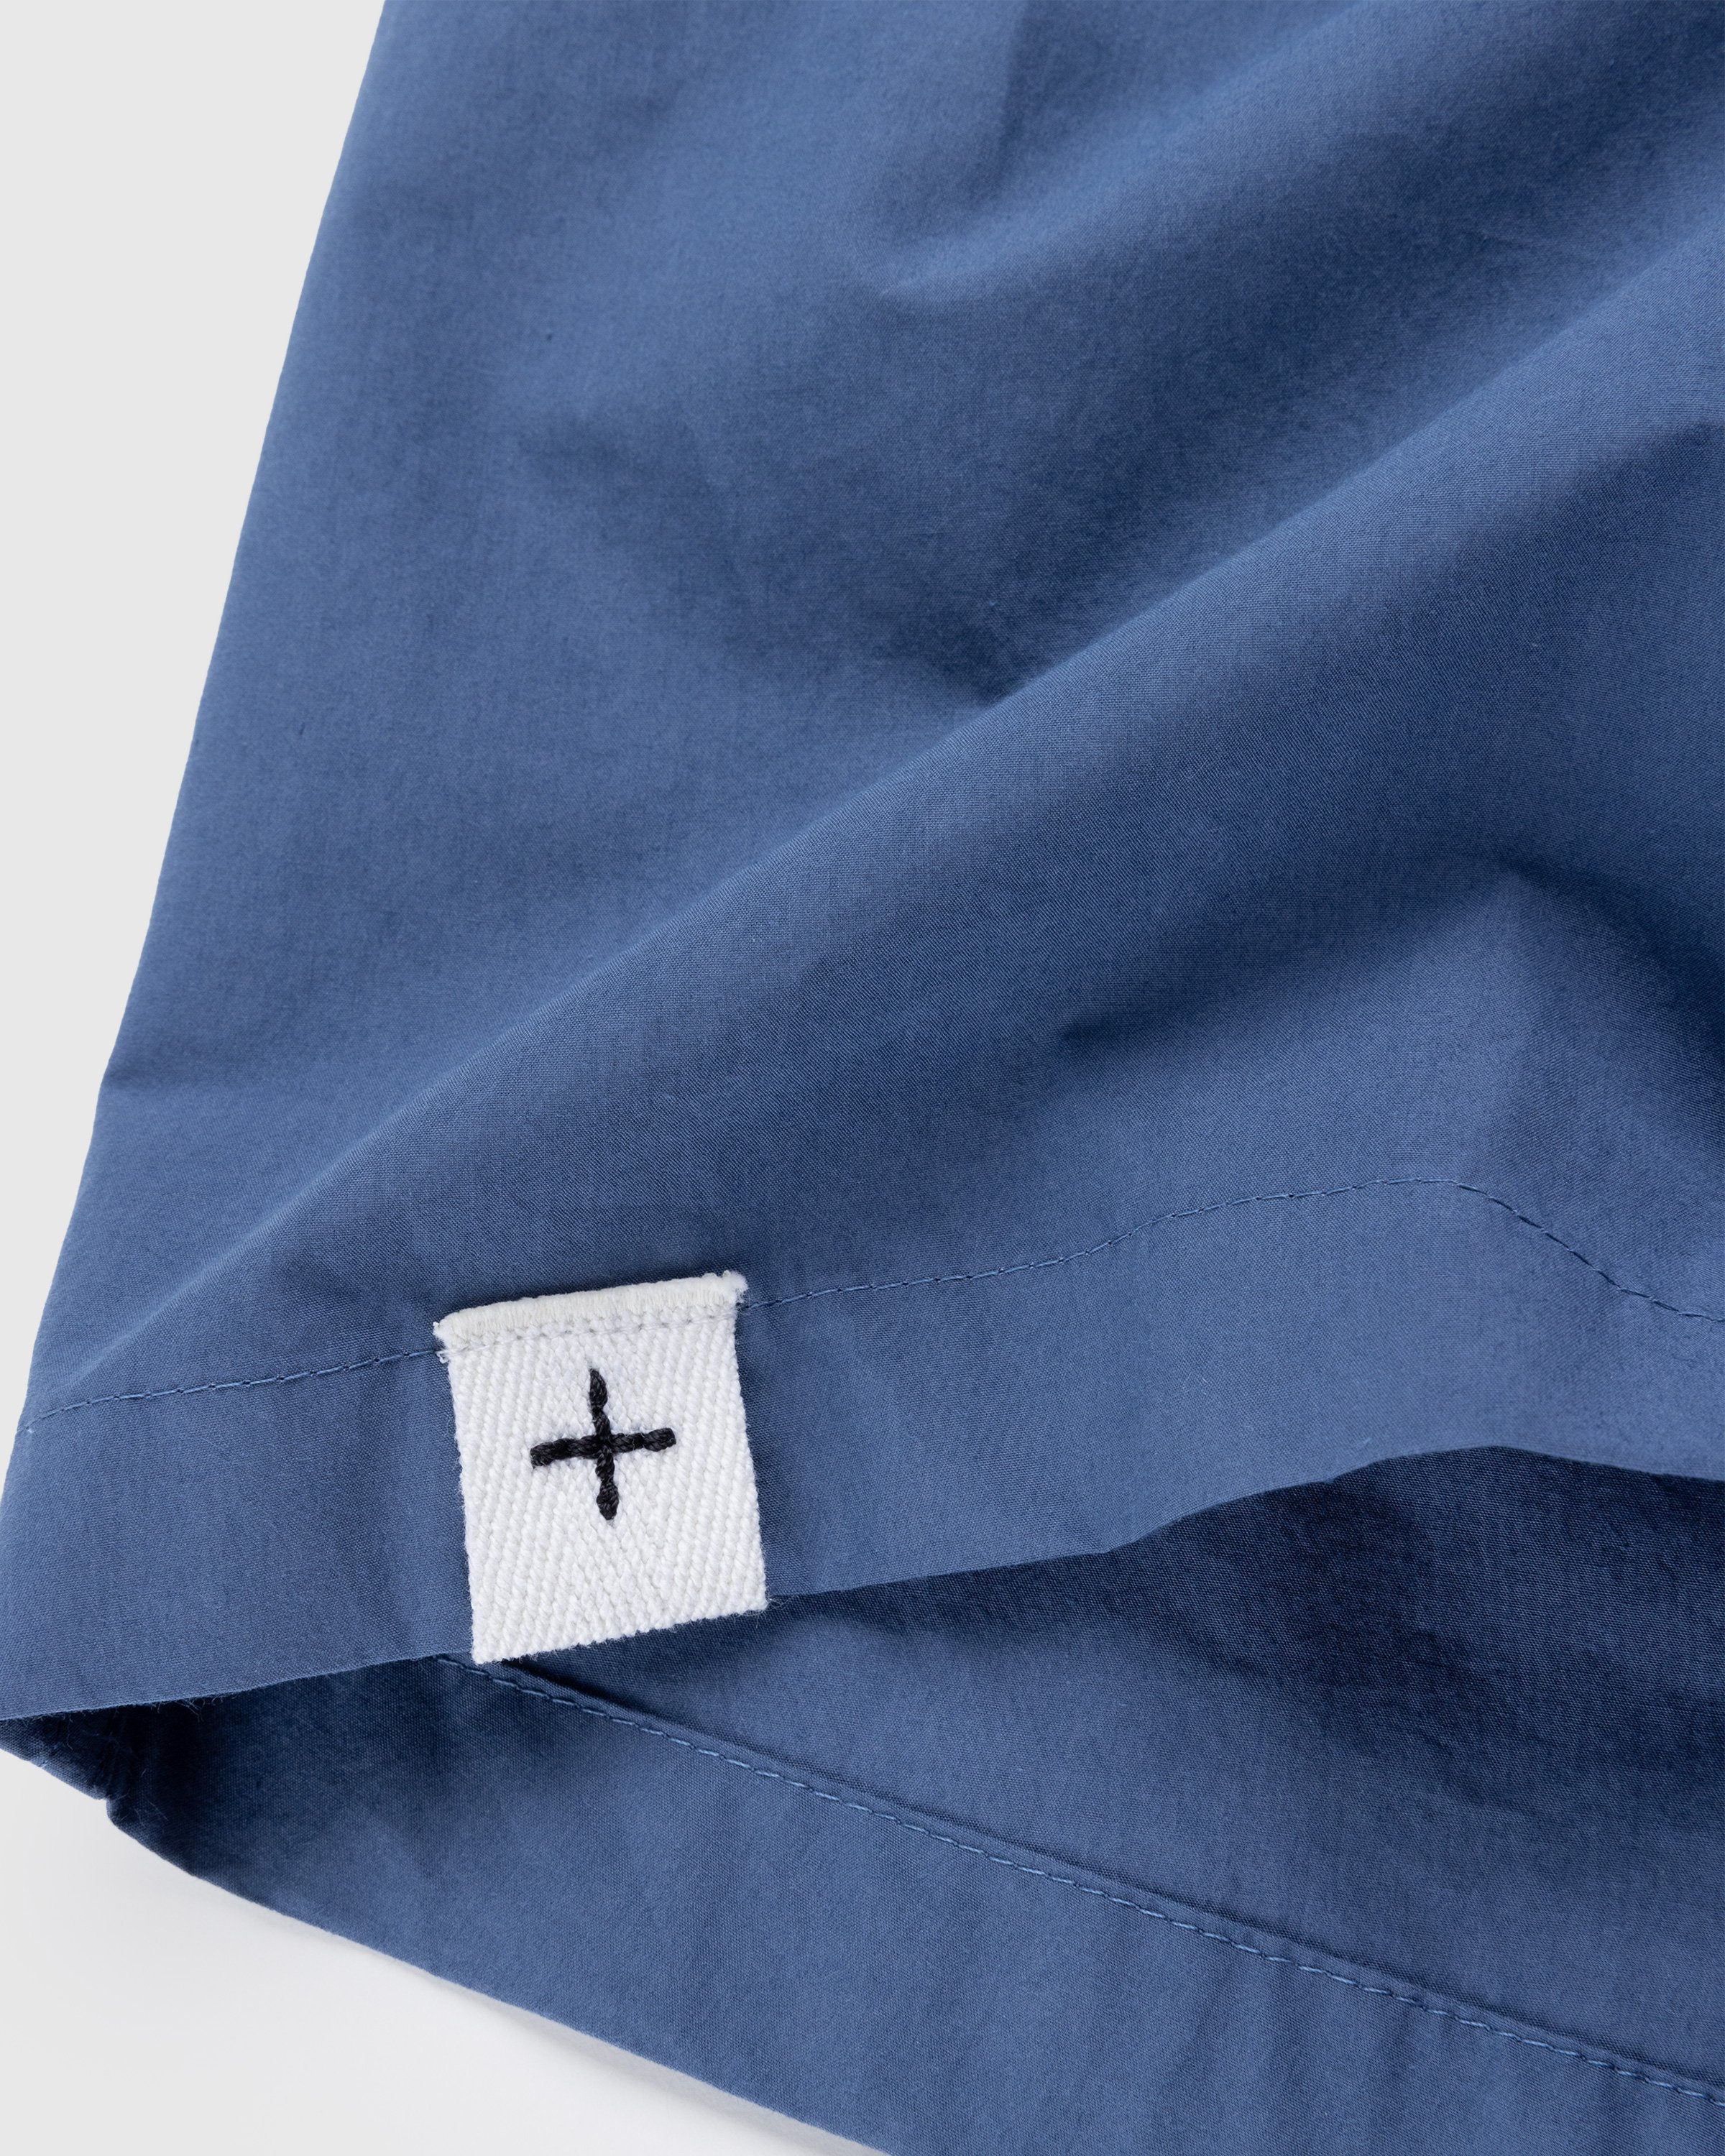 Jil Sander - Shirt 40 - Clothing - Blue - Image 7